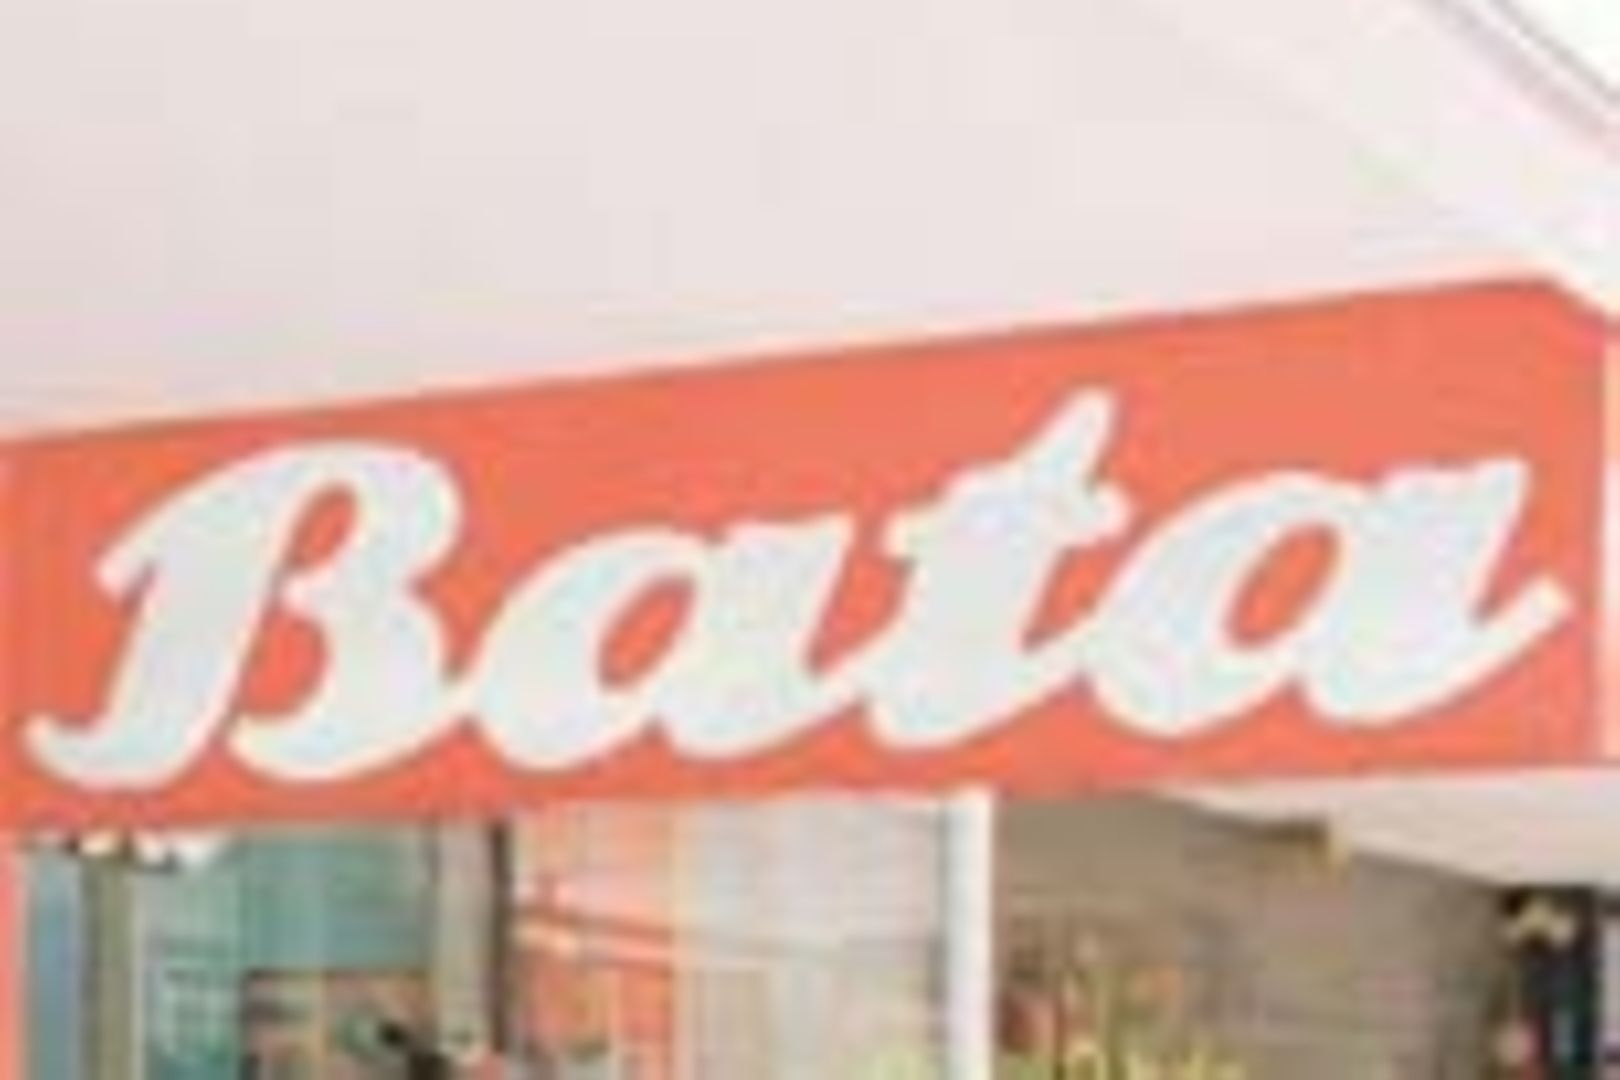 Buy Bata Mens CEASER Brown Sneaker - 9 UK (8544129) at Amazon.in